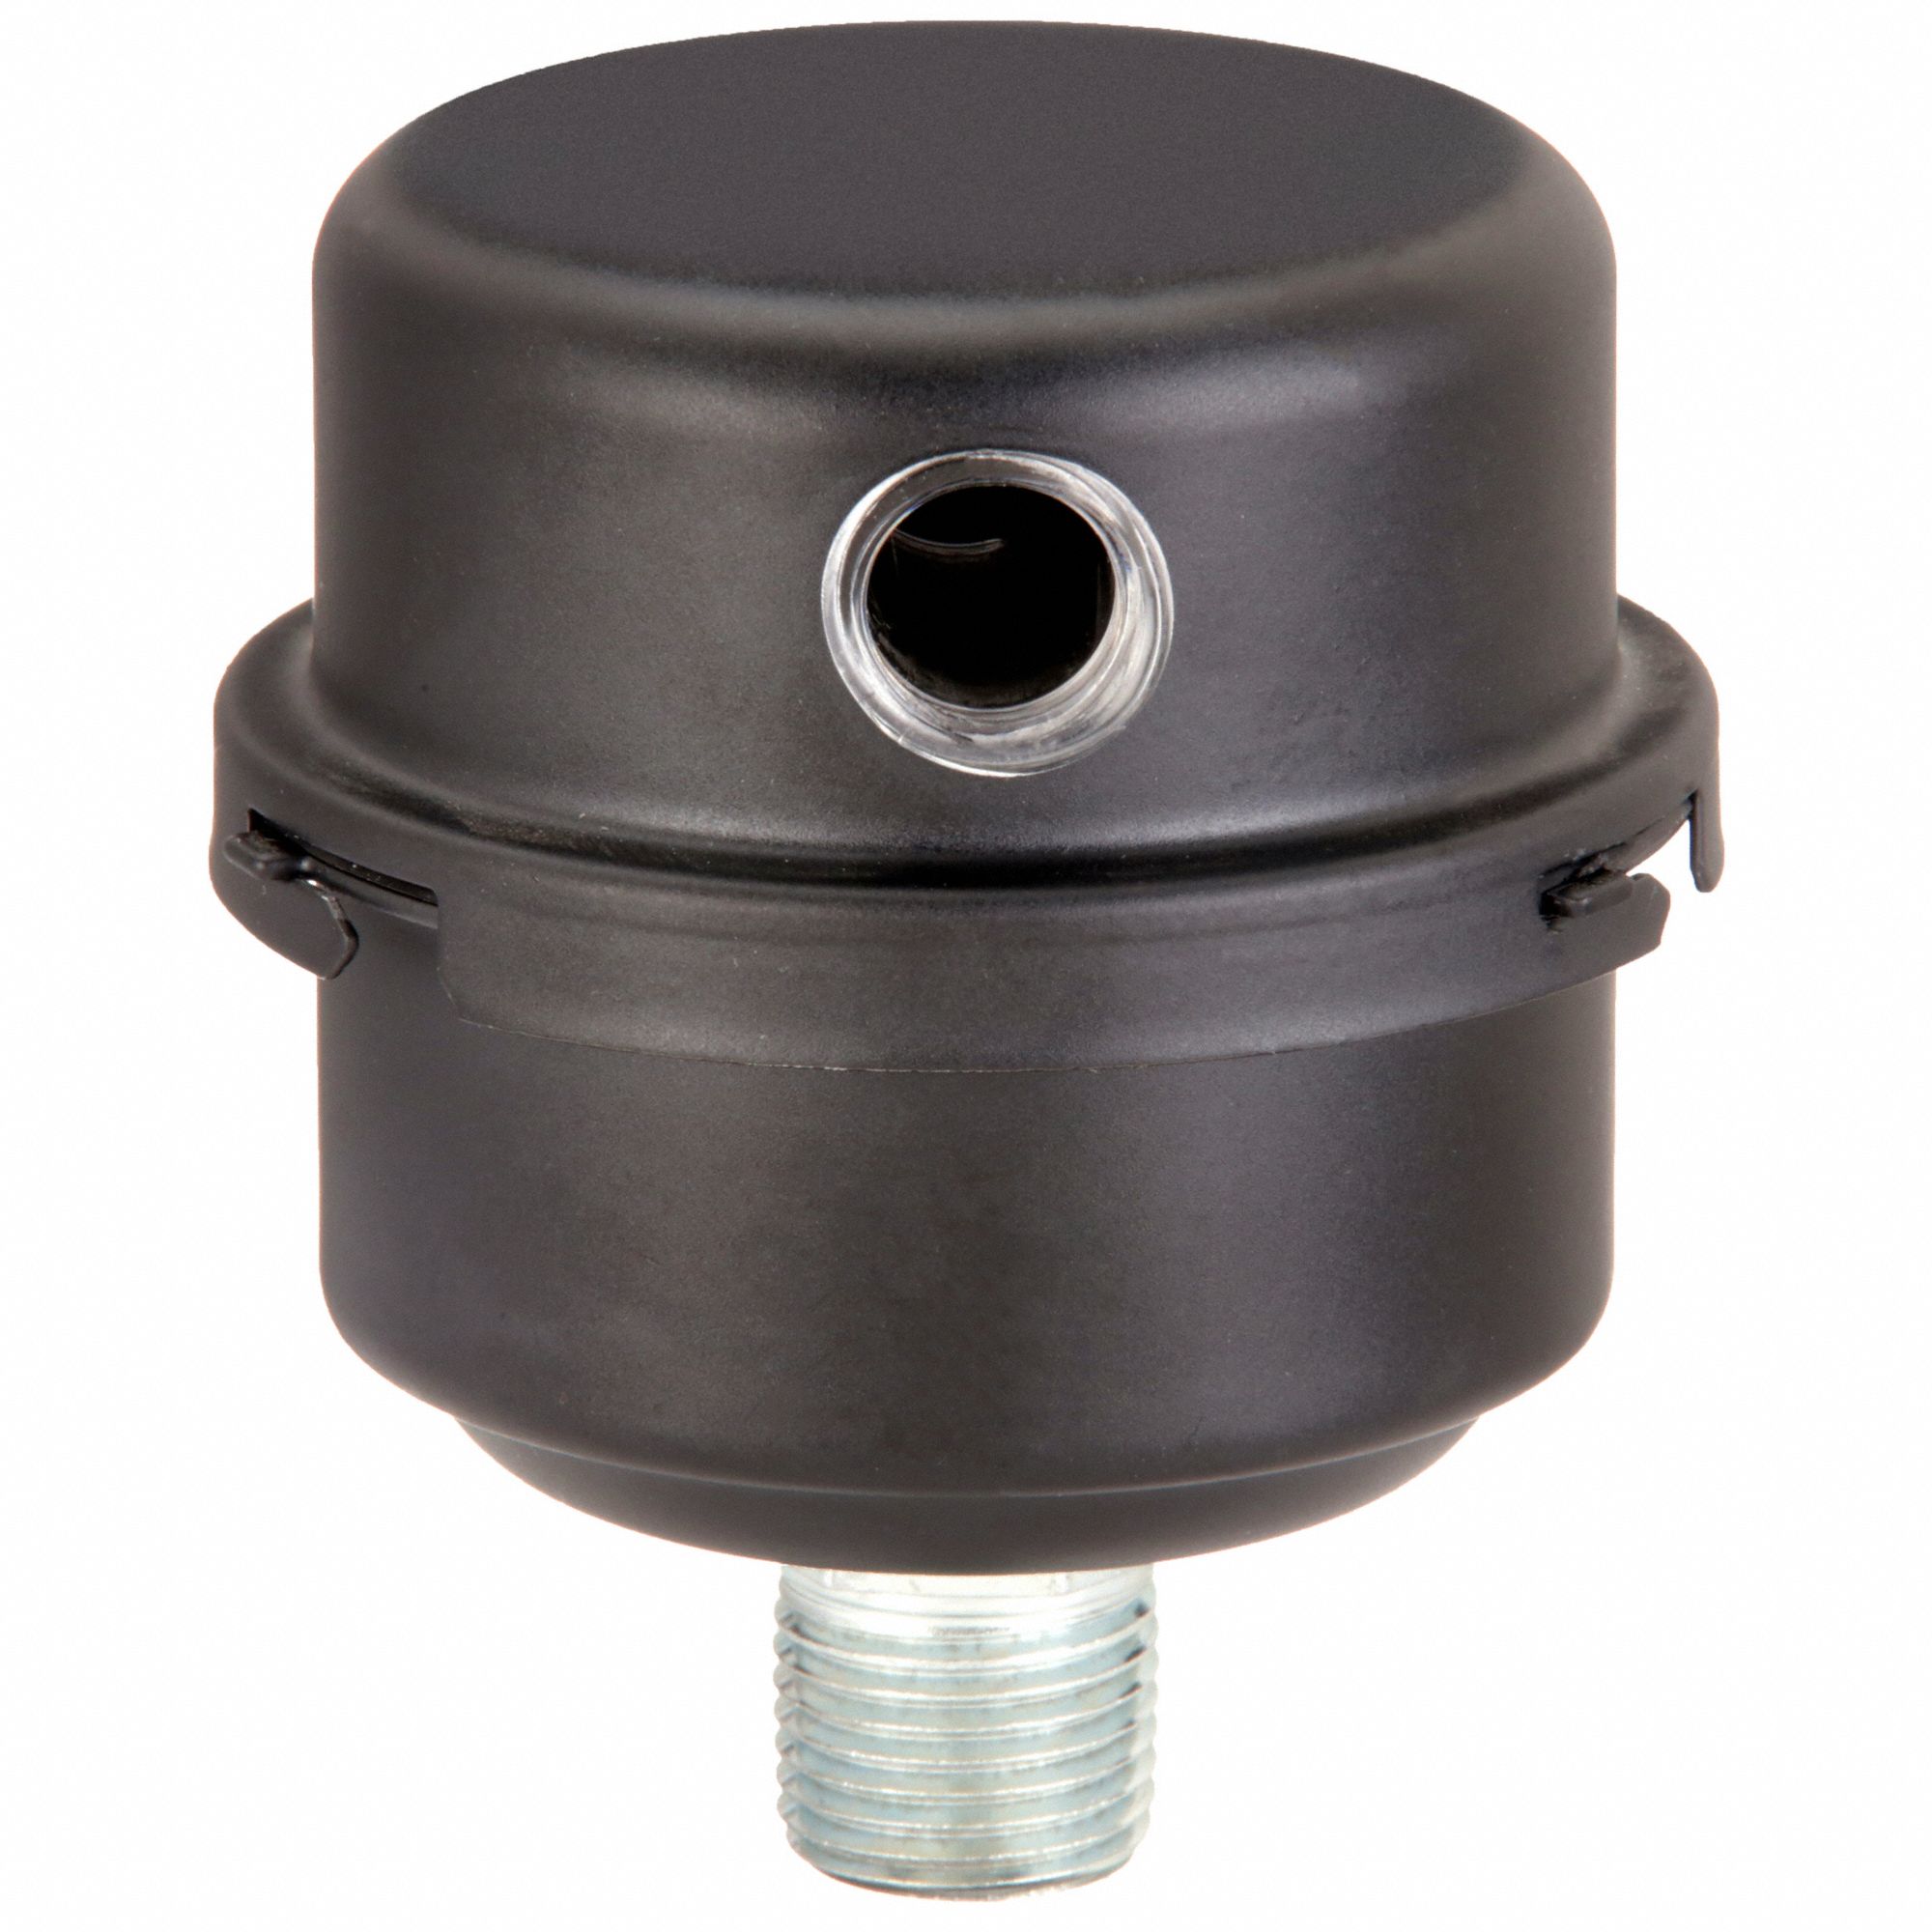 Air Compressor Silencer Muffler 32mm Intake Filter Air Pump Accessories Black 